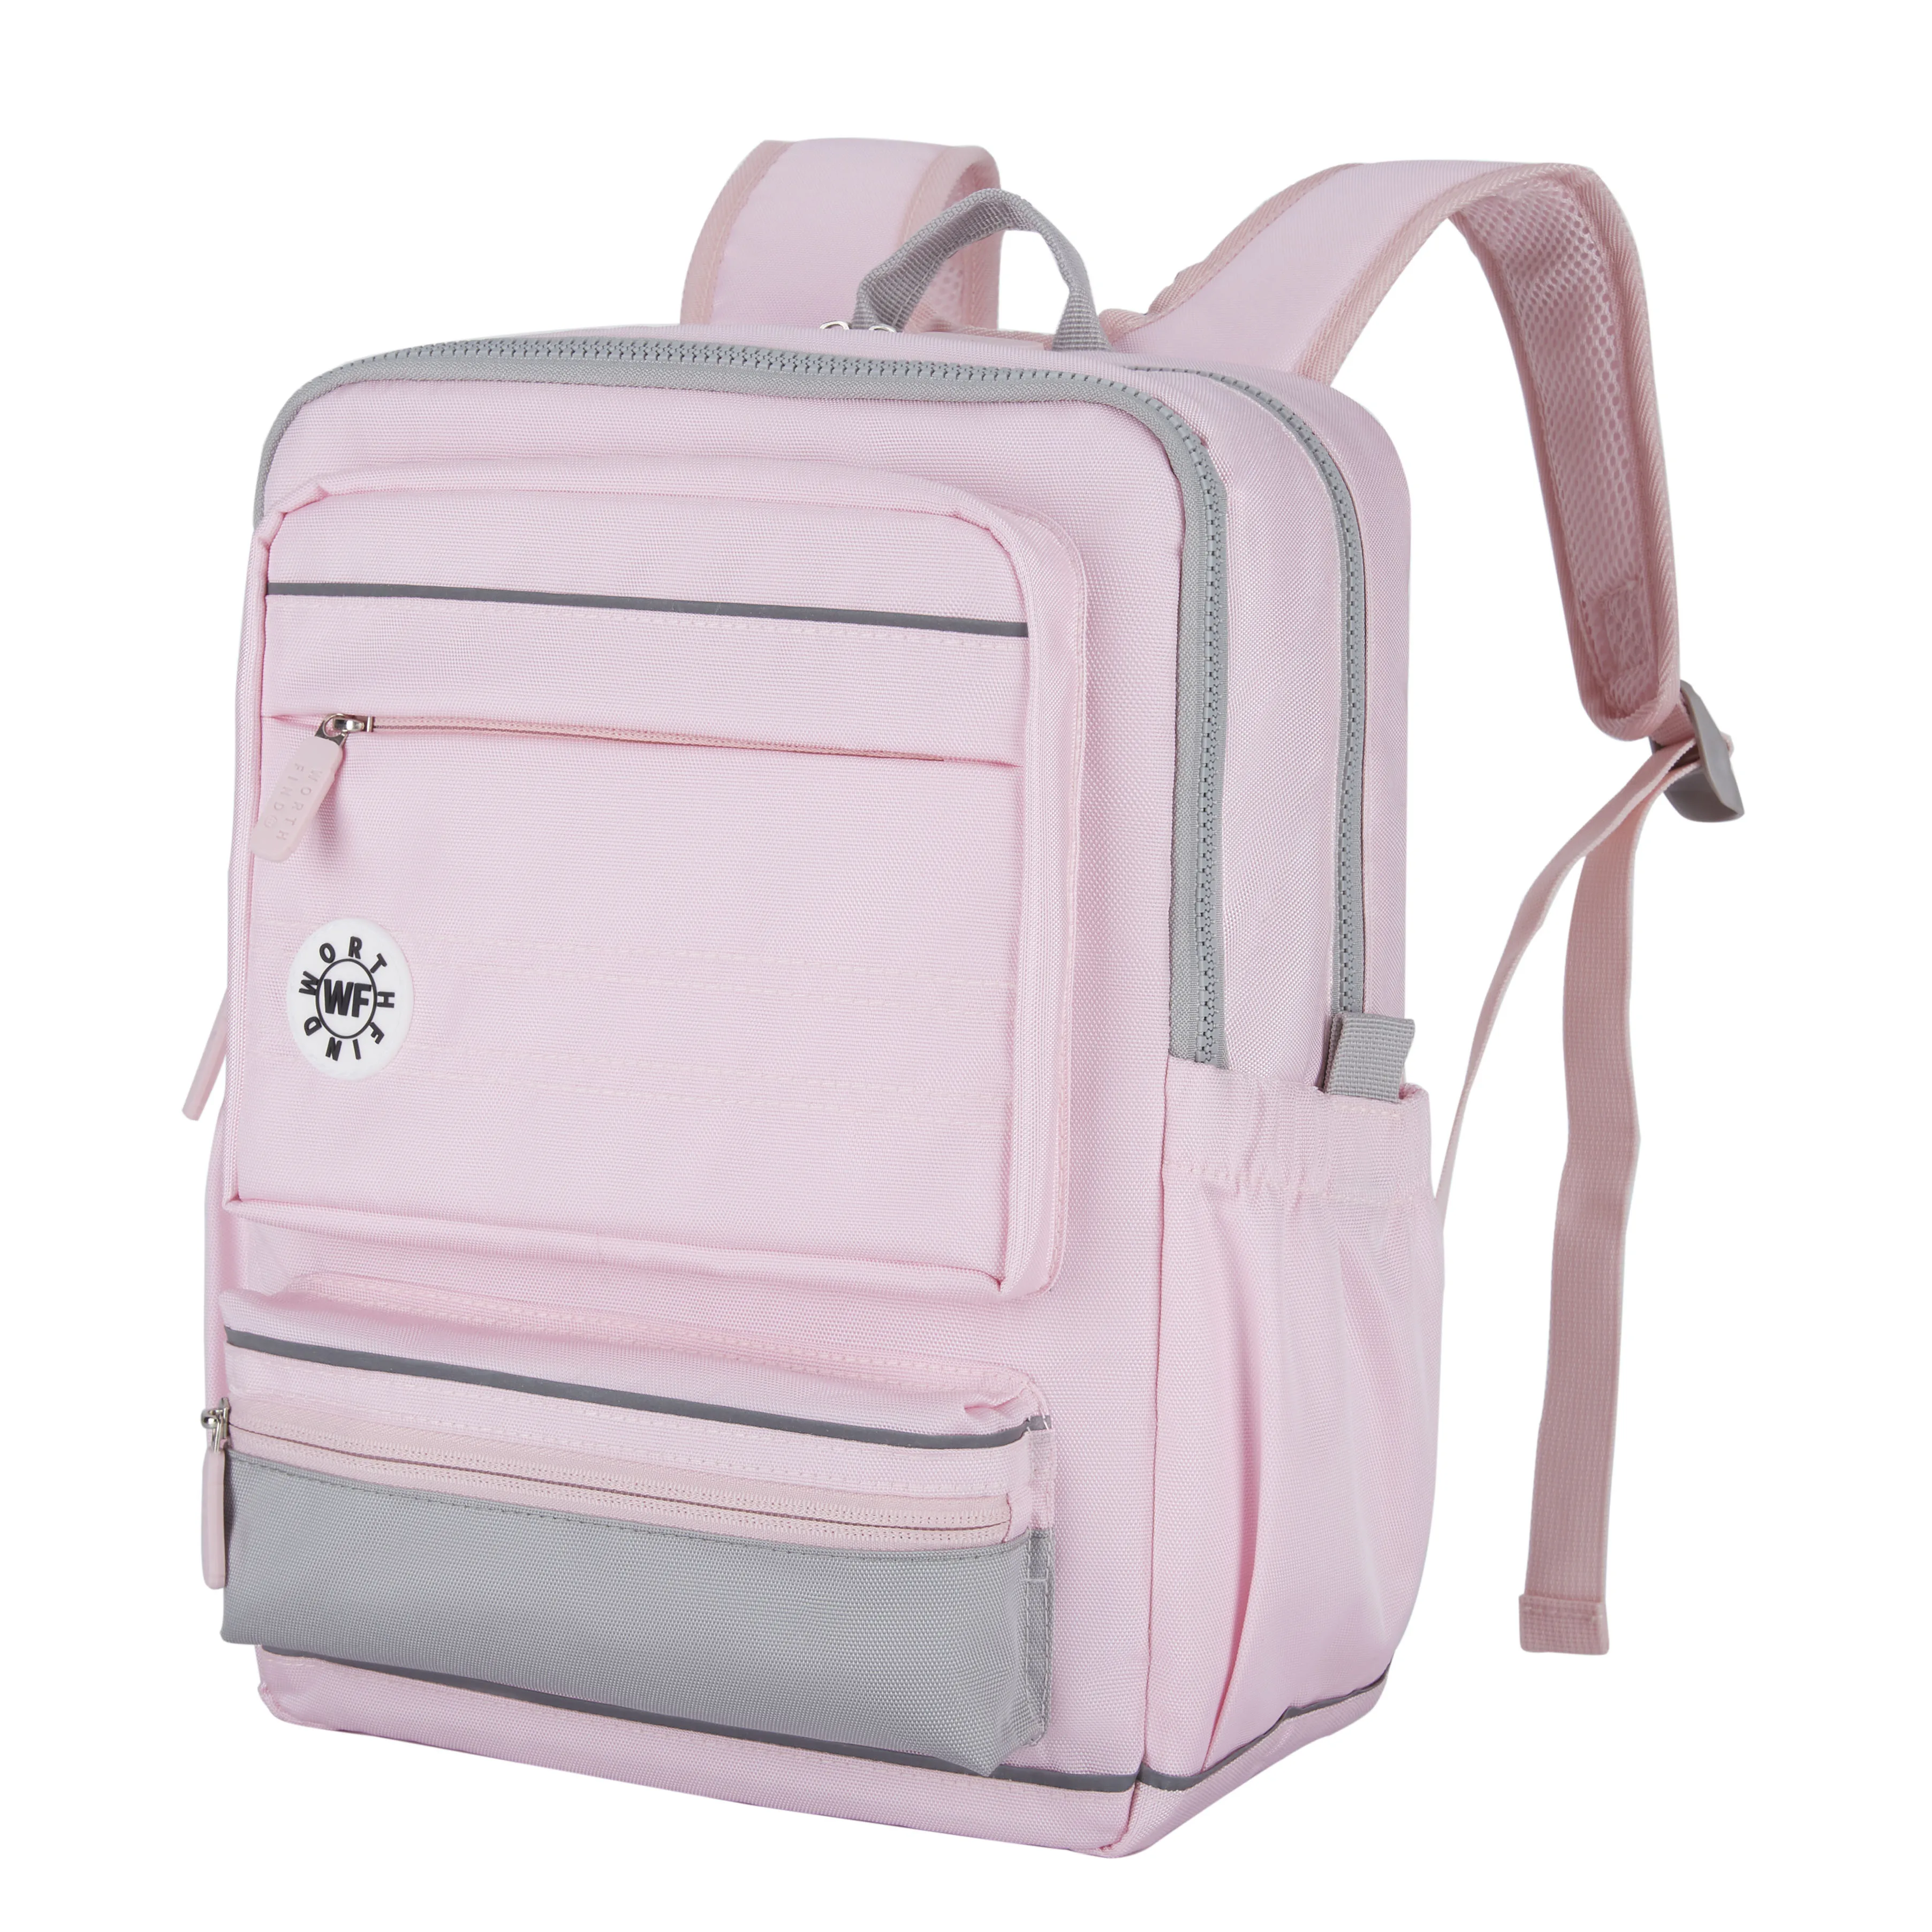 Worthfind New Arrival Double Layer Children Girls Backpack Mochilas School Bags Girls Book Bags For School